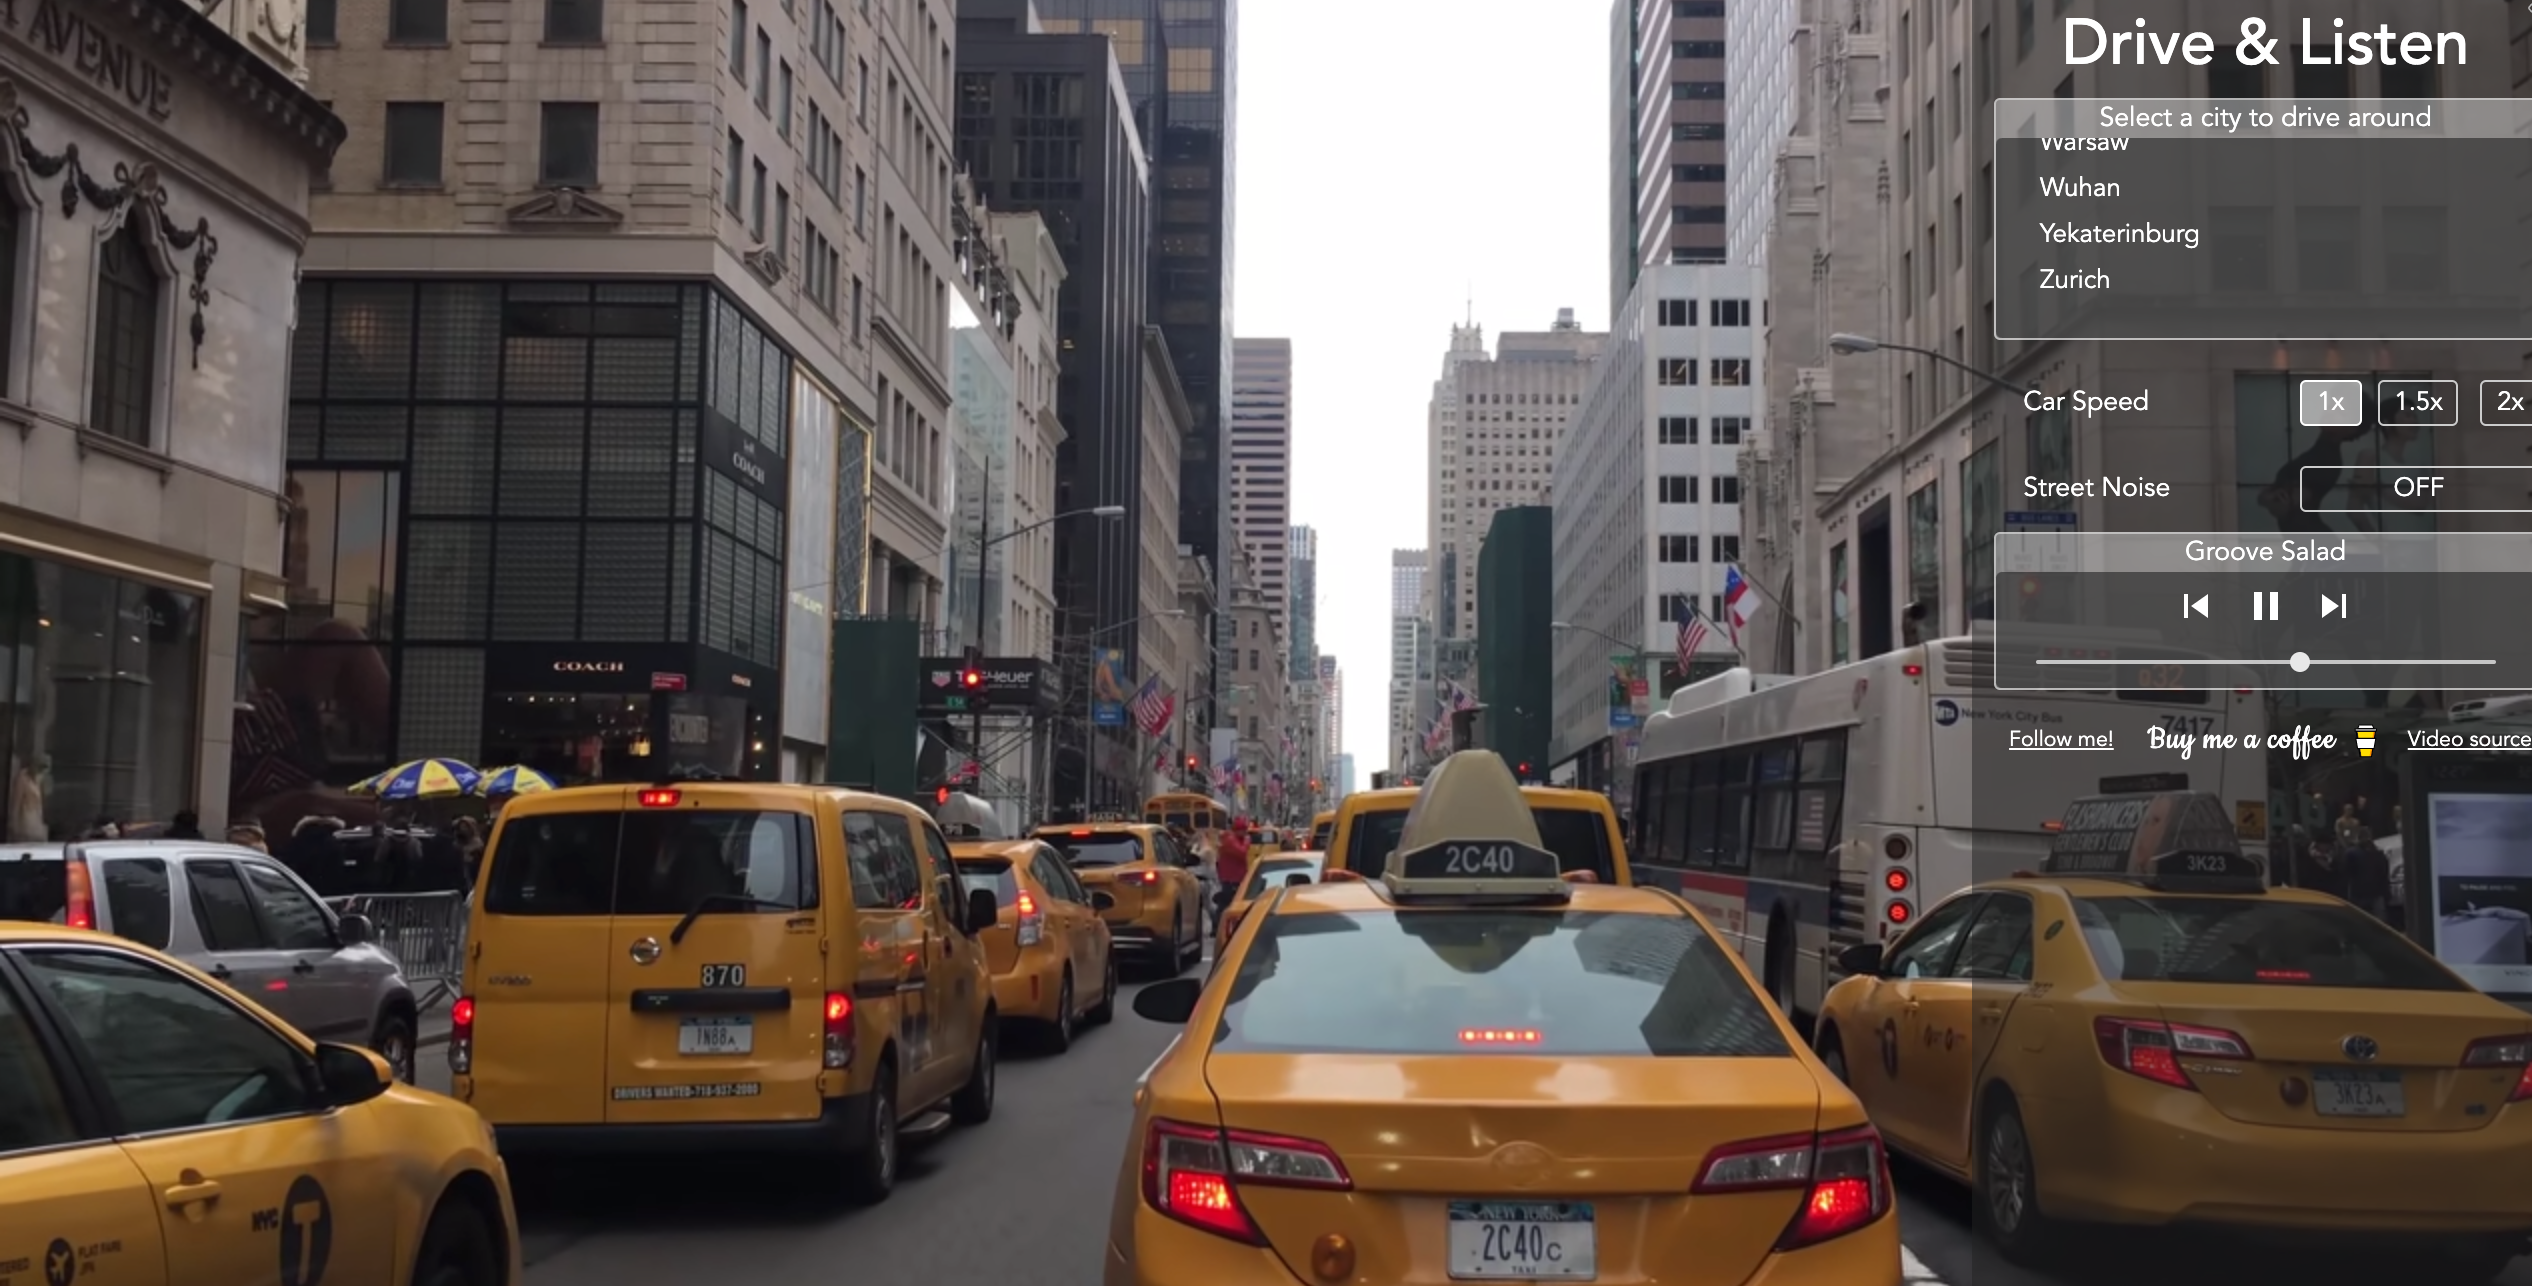 Dashcam footage of New York street view